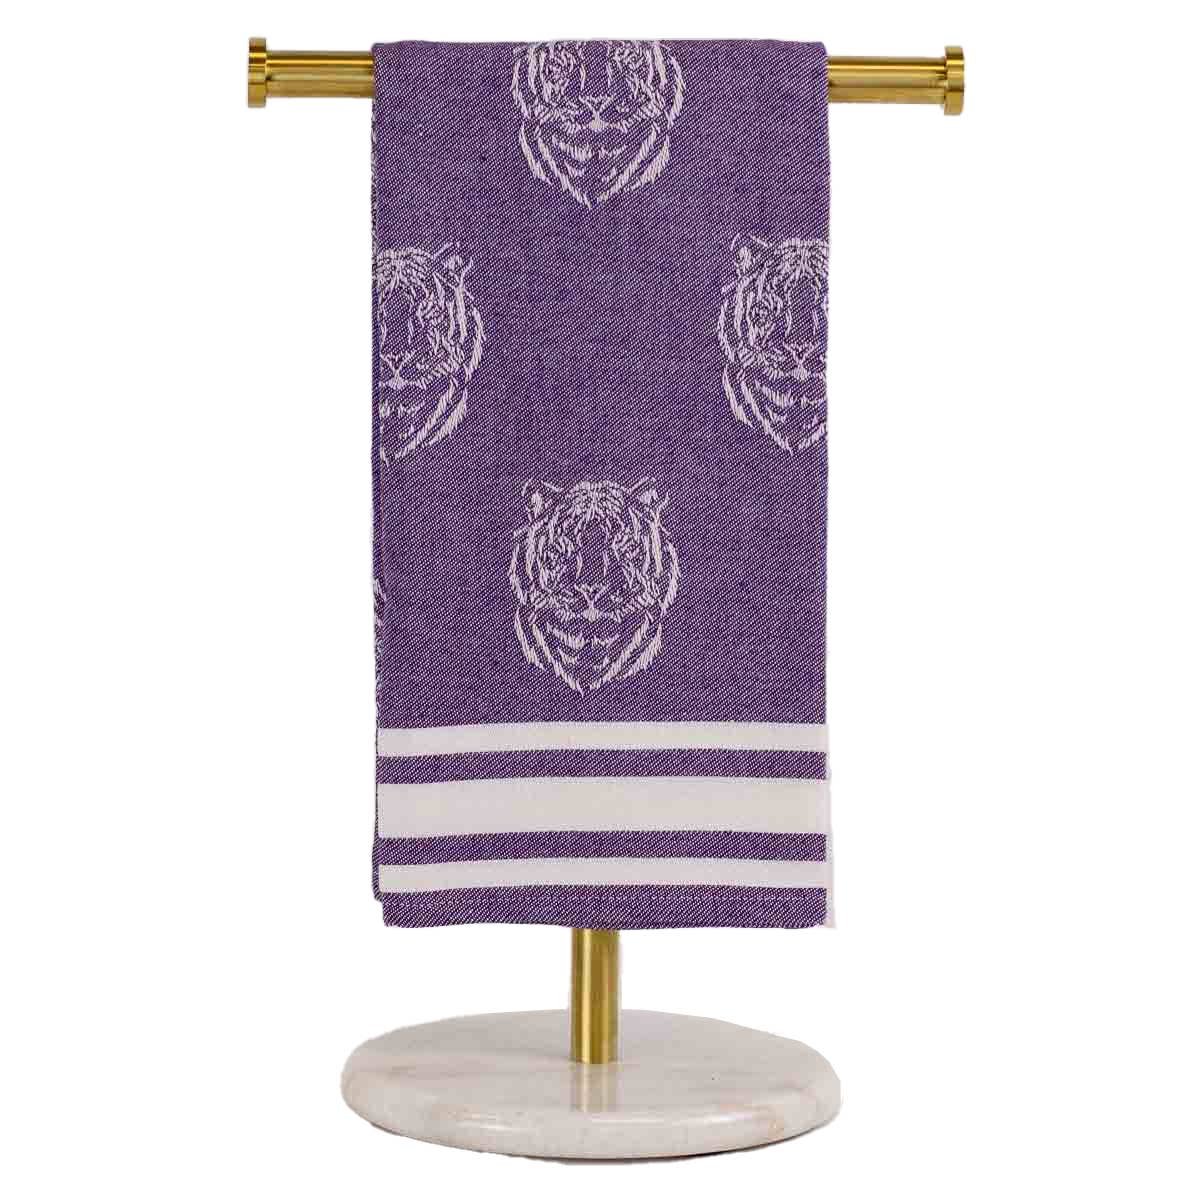 Jacquard Tiger Hand Towel   Purple/White   20x28